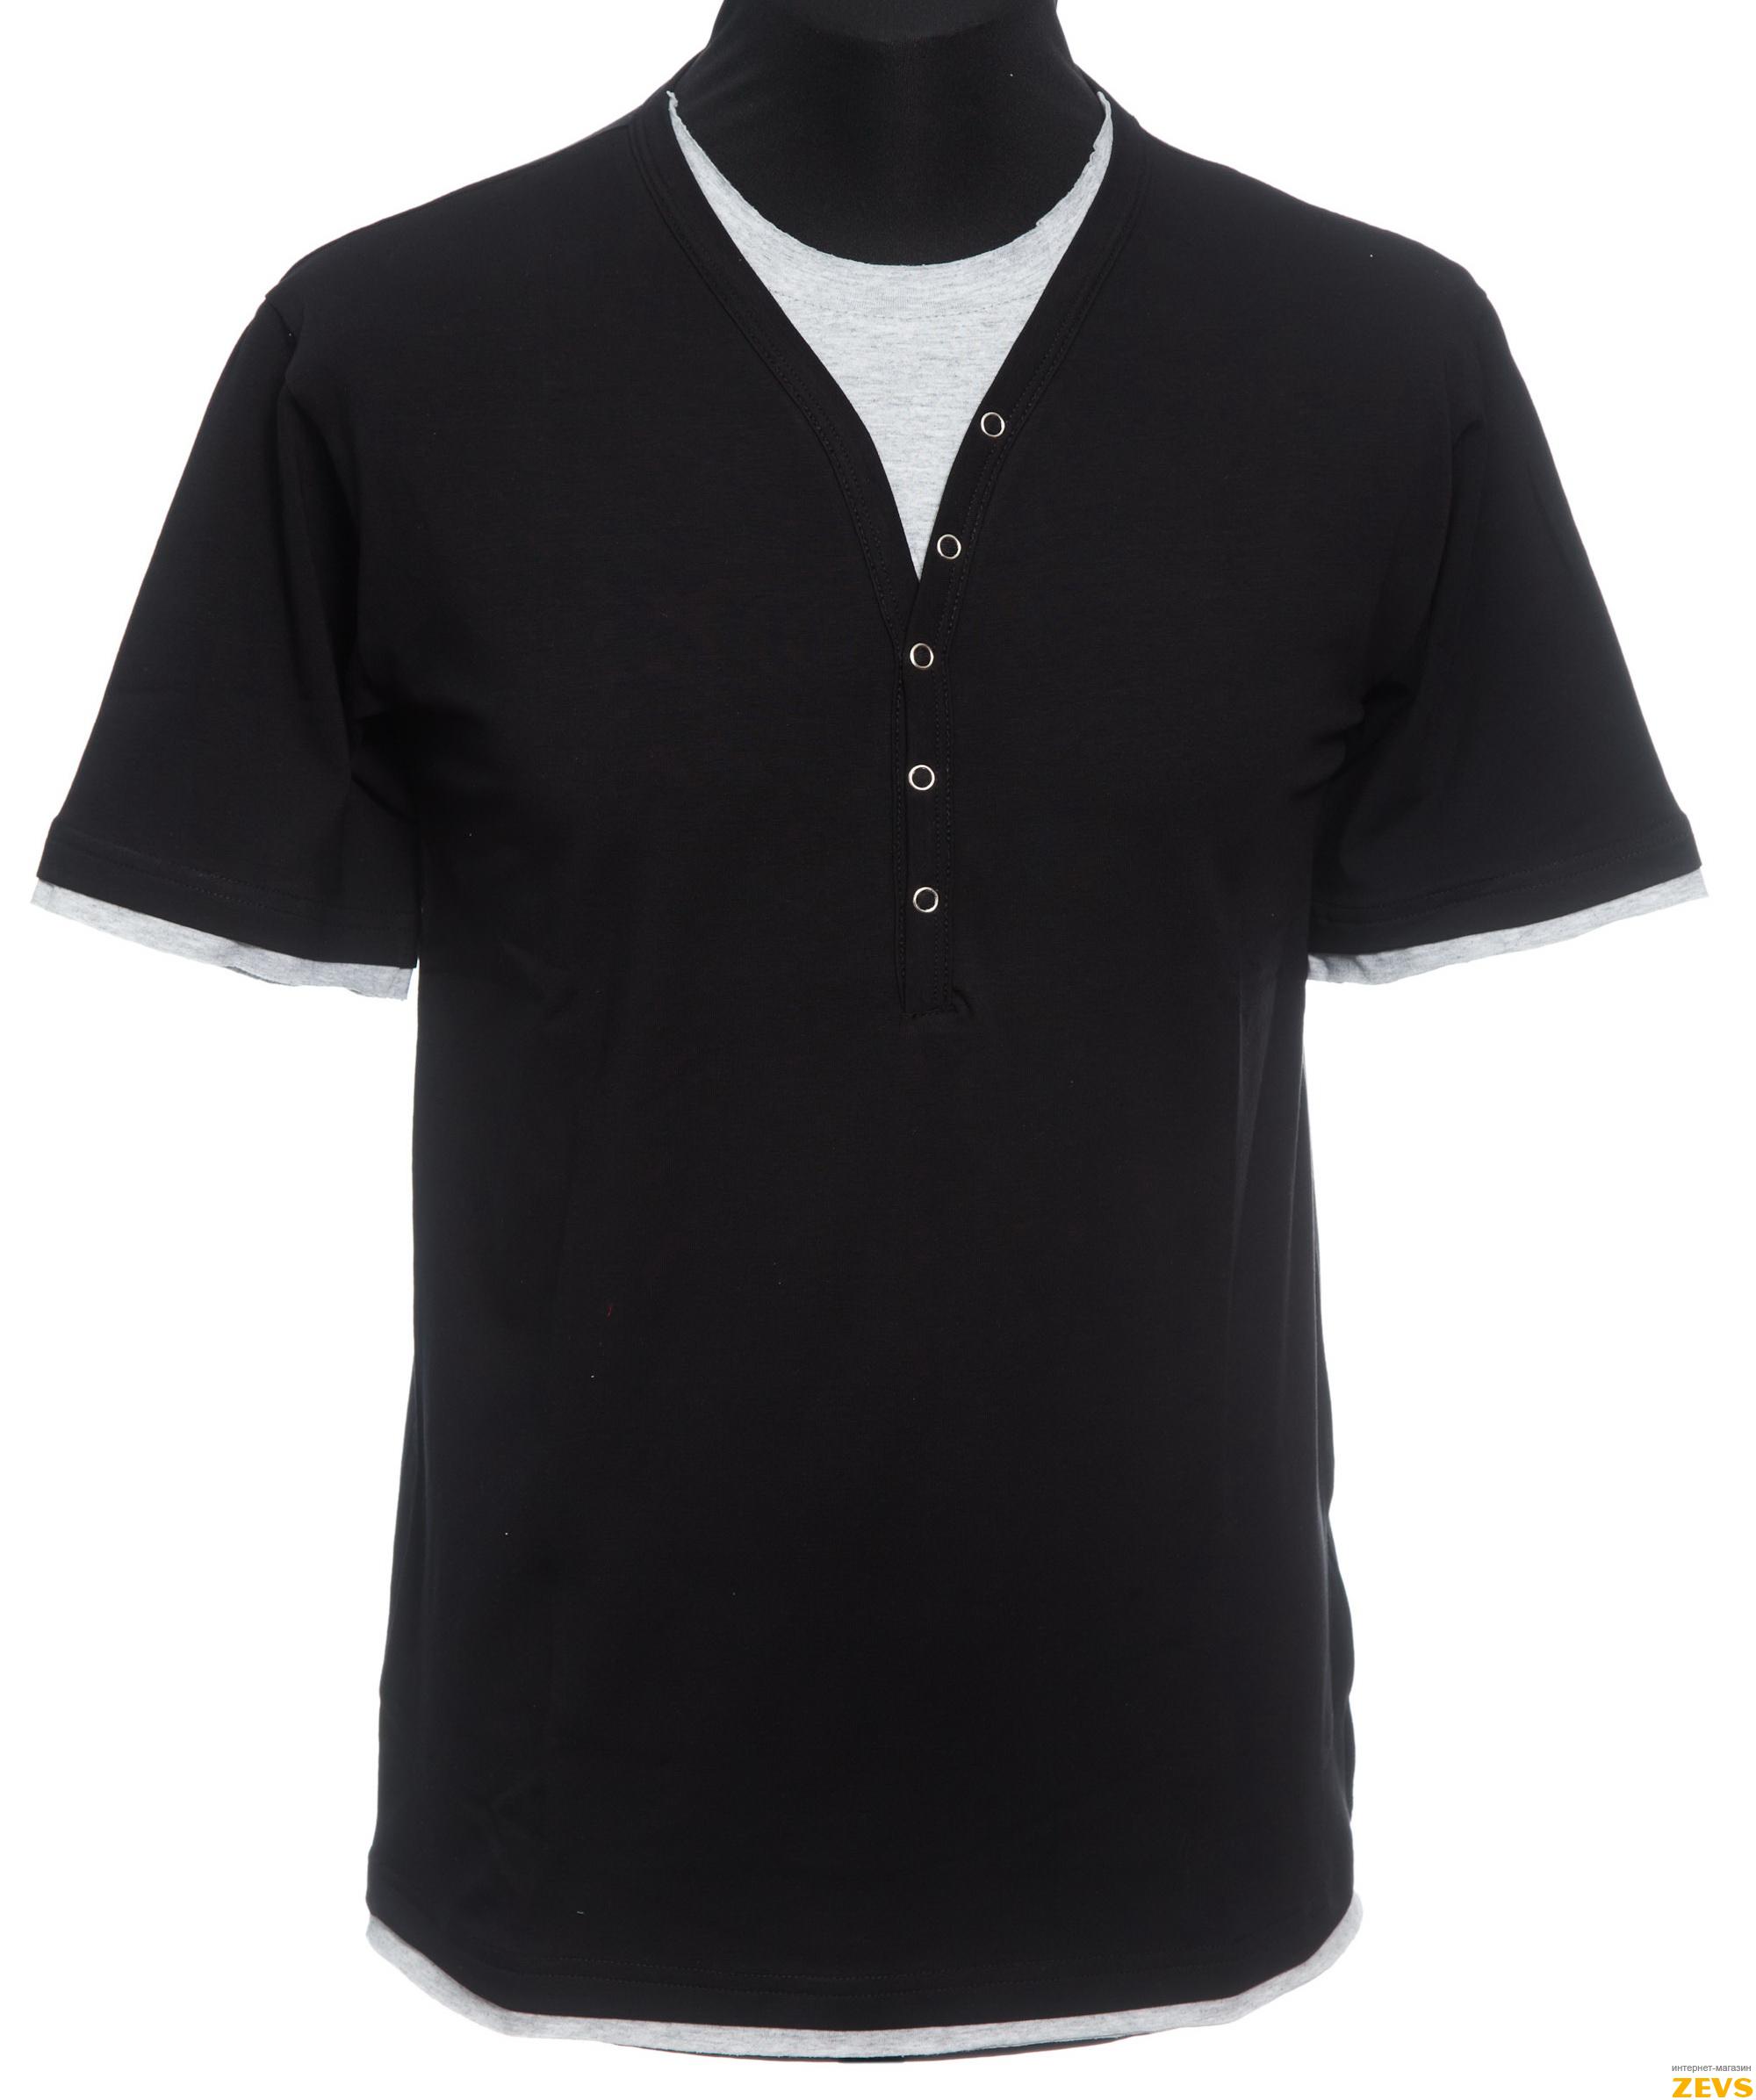 Теплая мужская футболка с длинным рукавом «Doreanse 2960-01 Thermo» черная